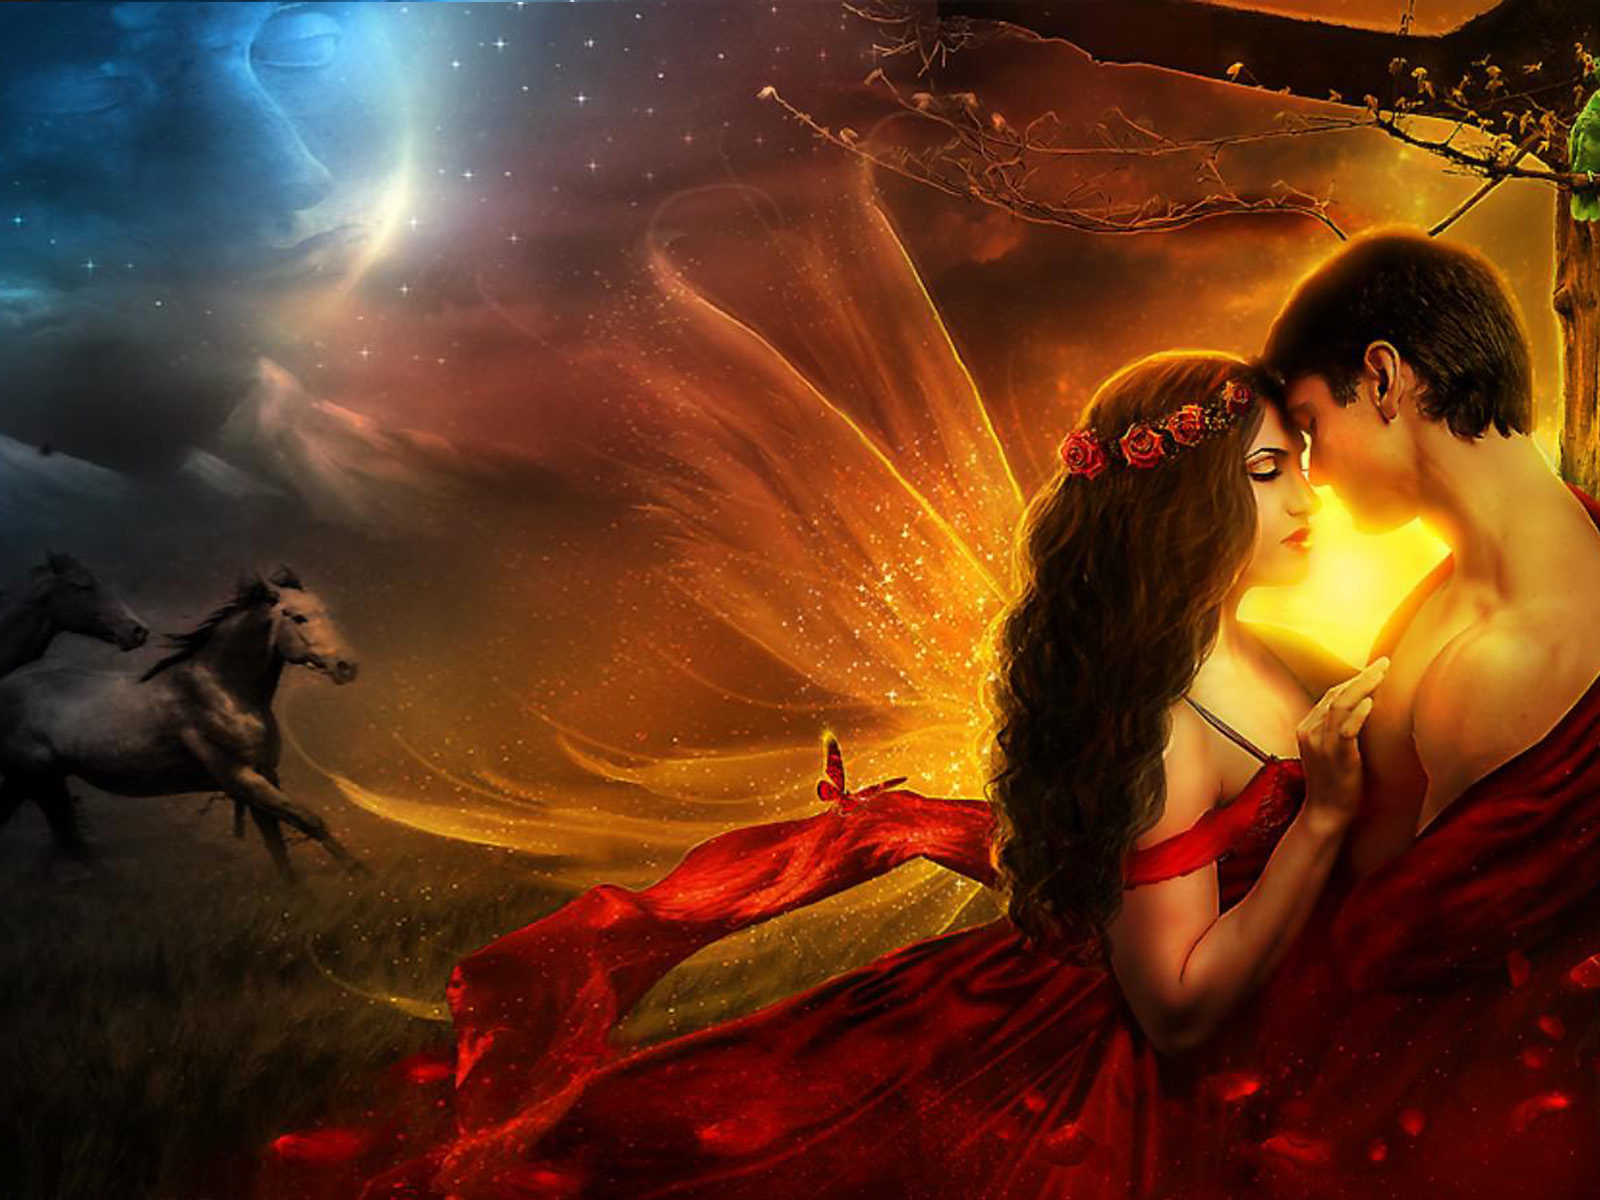 Long awaited love romance fantasy art HD Wallpaper, Wallpaper13.com